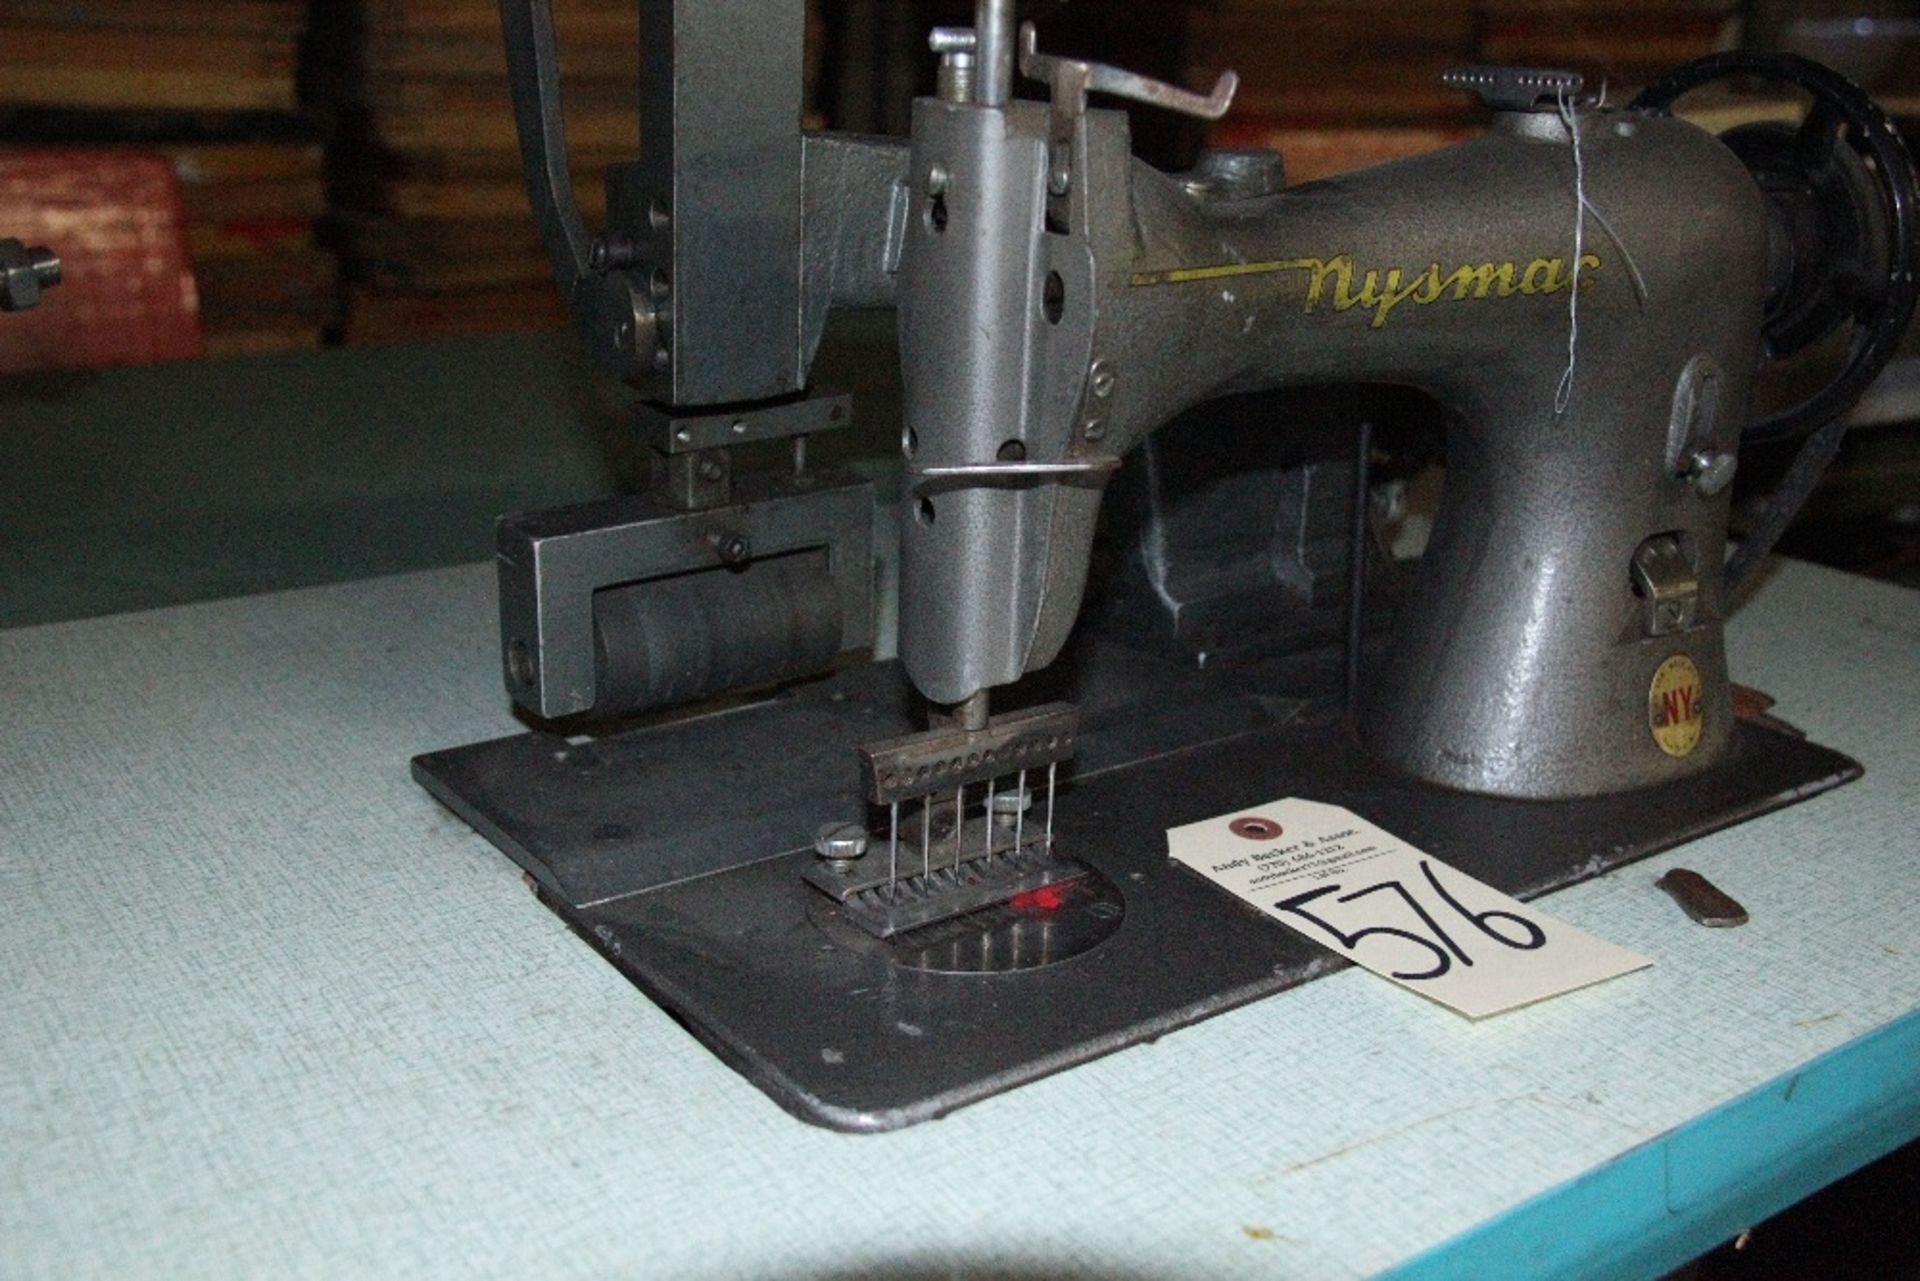 New York Sewing Machine 12-Needle Chainstitch Sewing Machine - Image 2 of 5